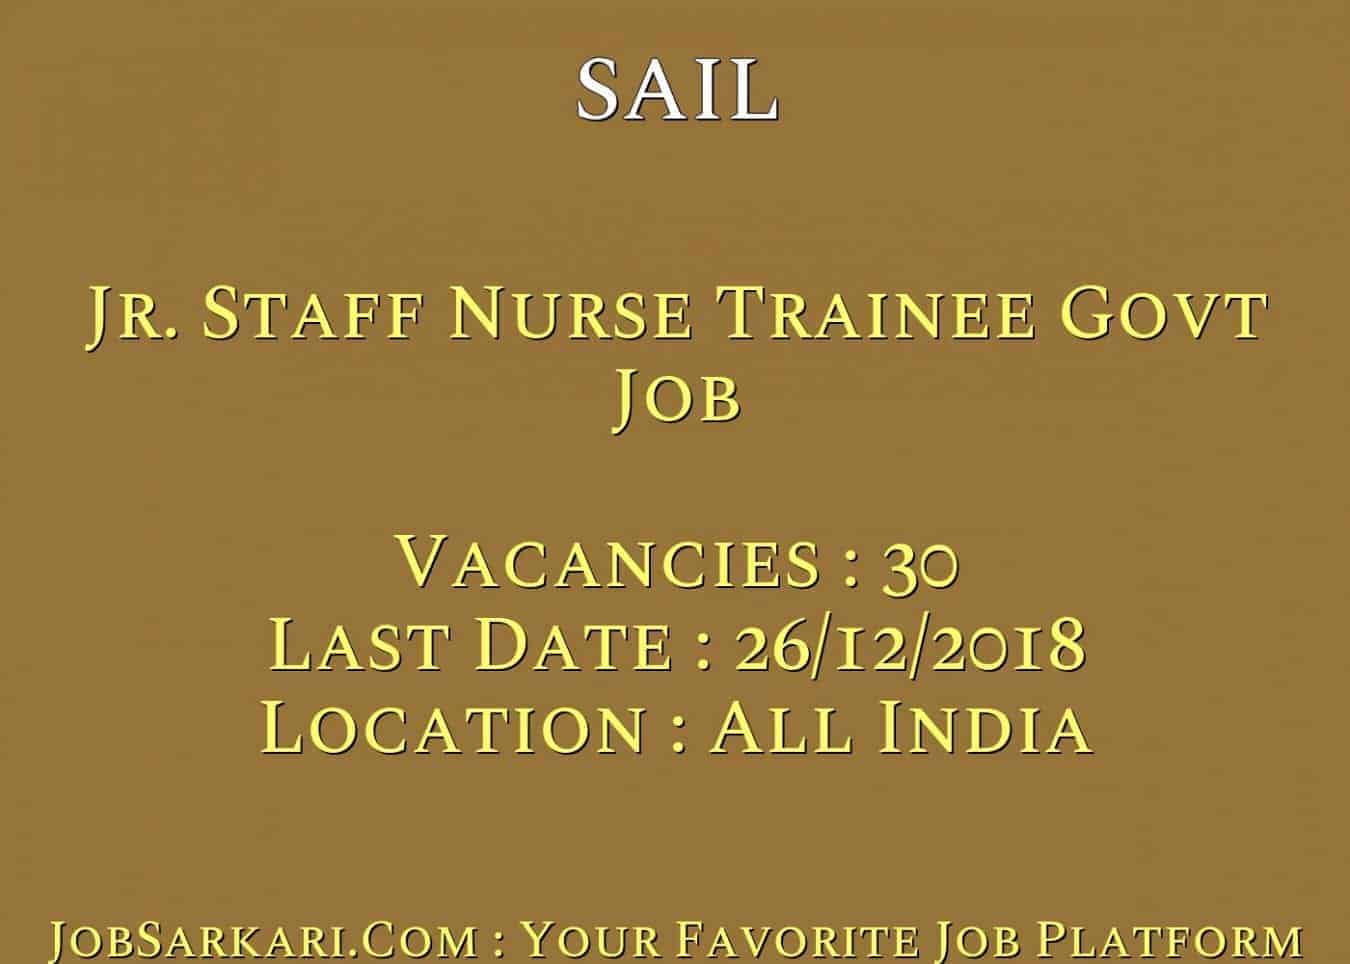 SAIL Recruitment 2018 for Jr. Staff Nurse Trainee Govt Job